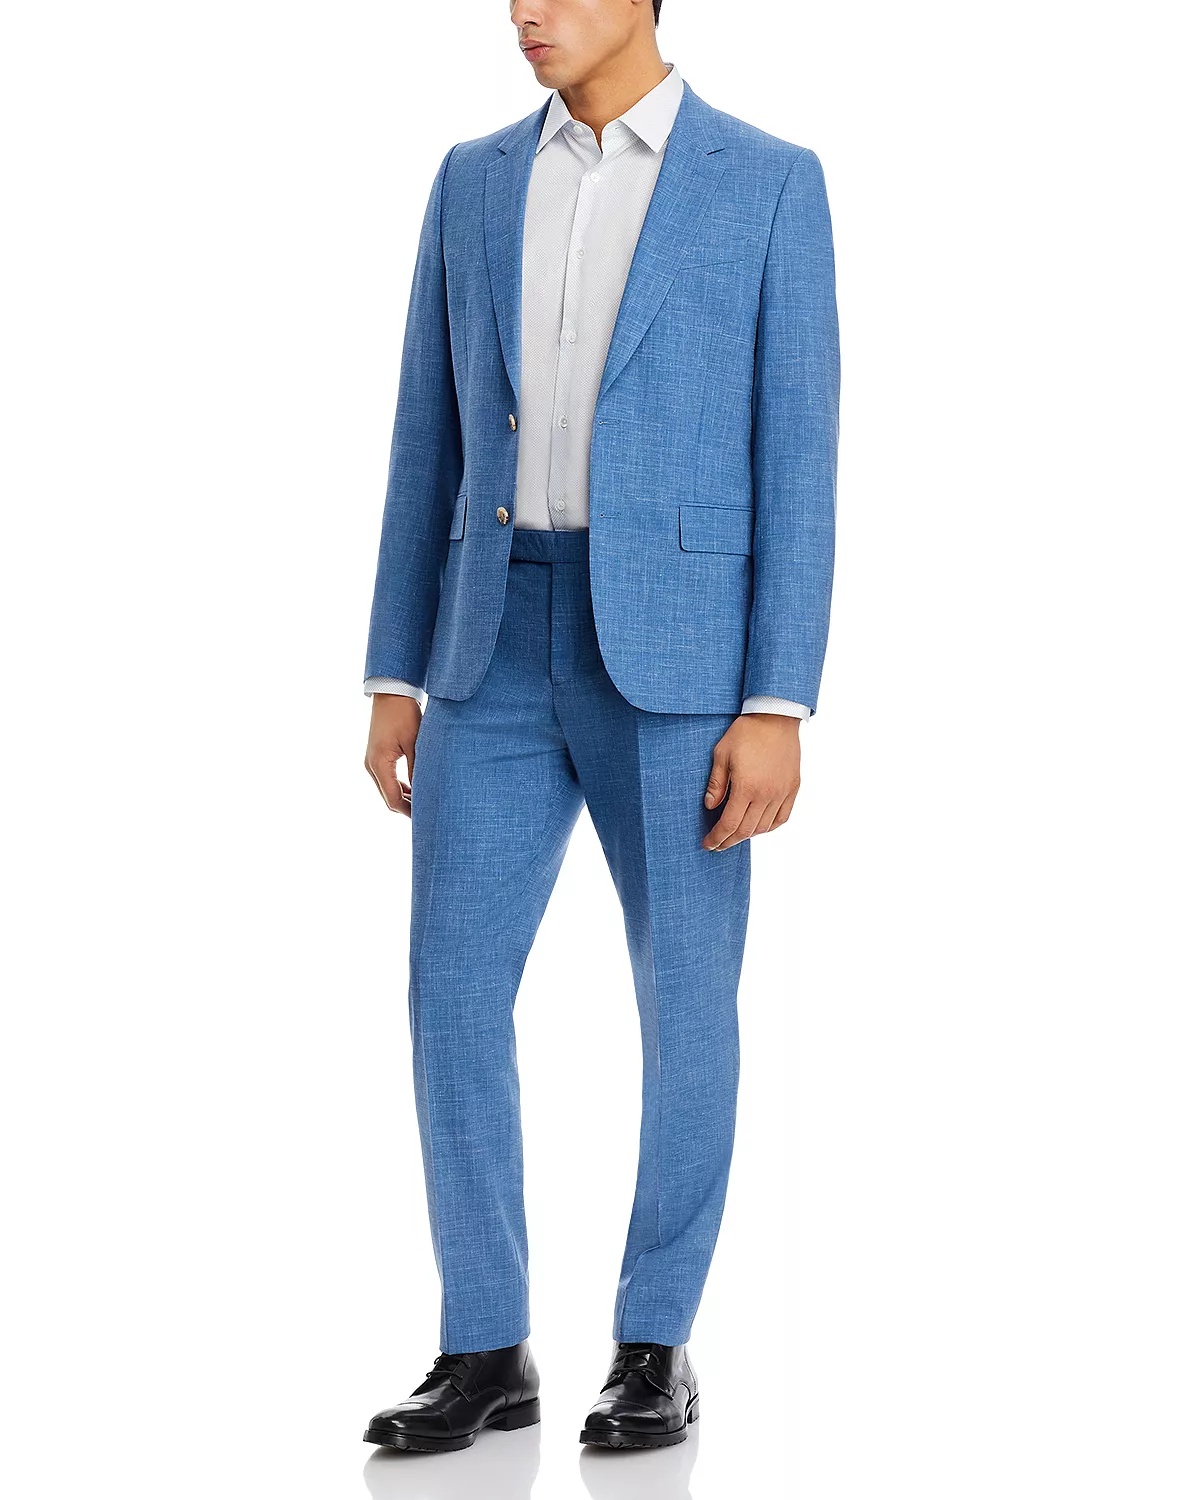 Soho Wool & Linen Slub Weave Extra Slim Fit Suit - 1